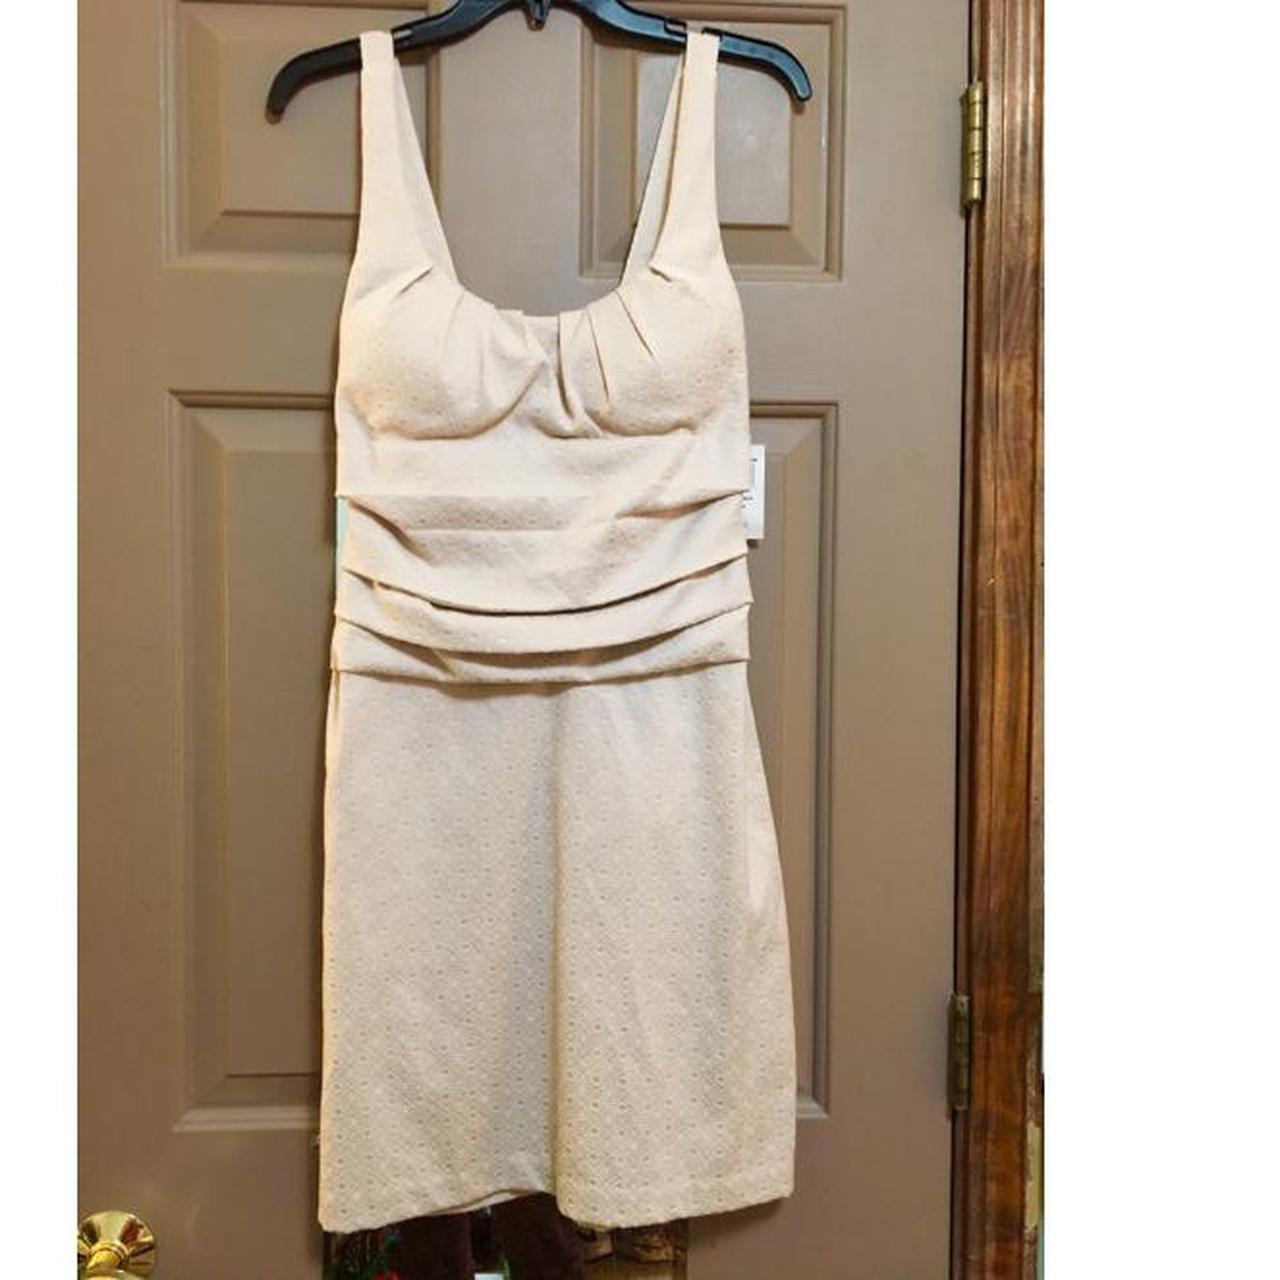 Product Image 1 - Beige cream dress 
Sleeveless 
Color